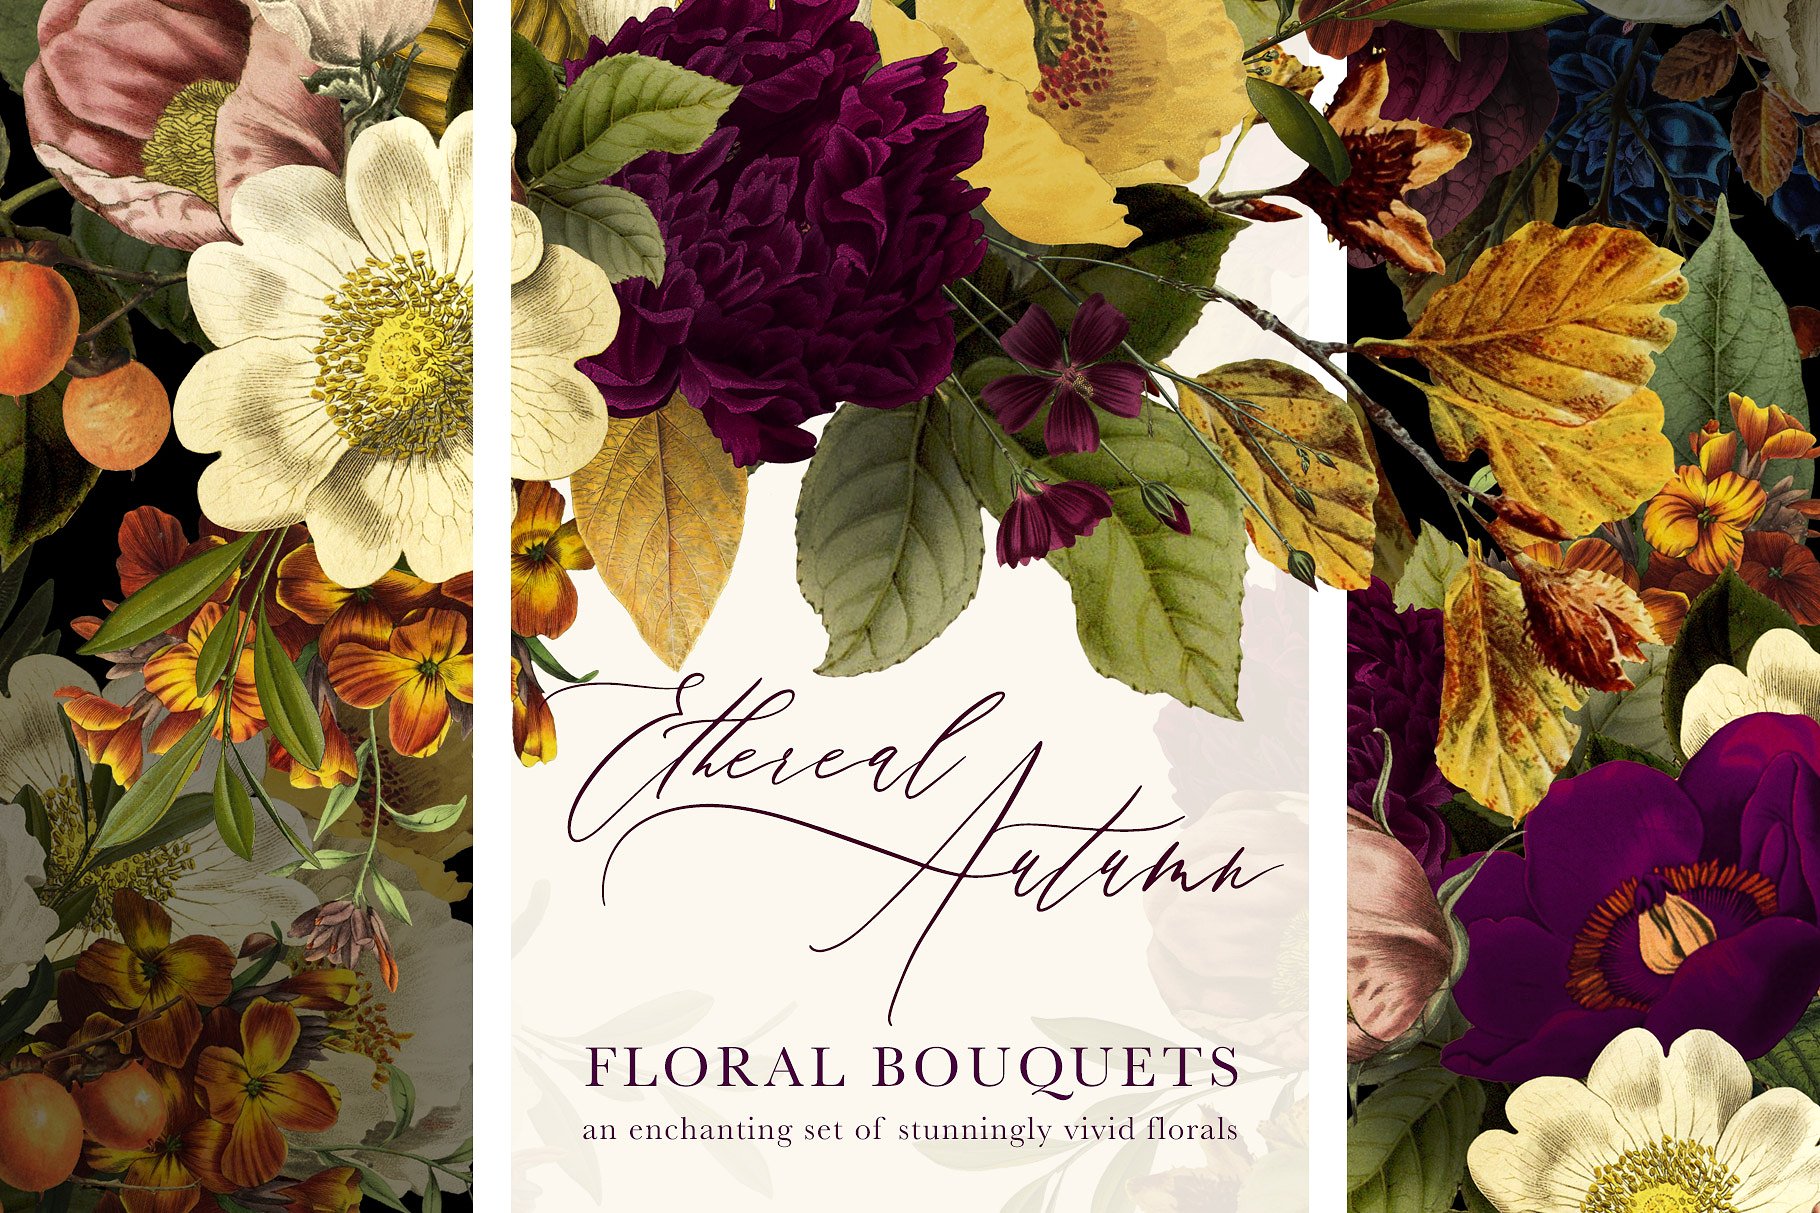 栩栩如生的秋天花束插画 Ethereal Autumn Floral Bouquets插图